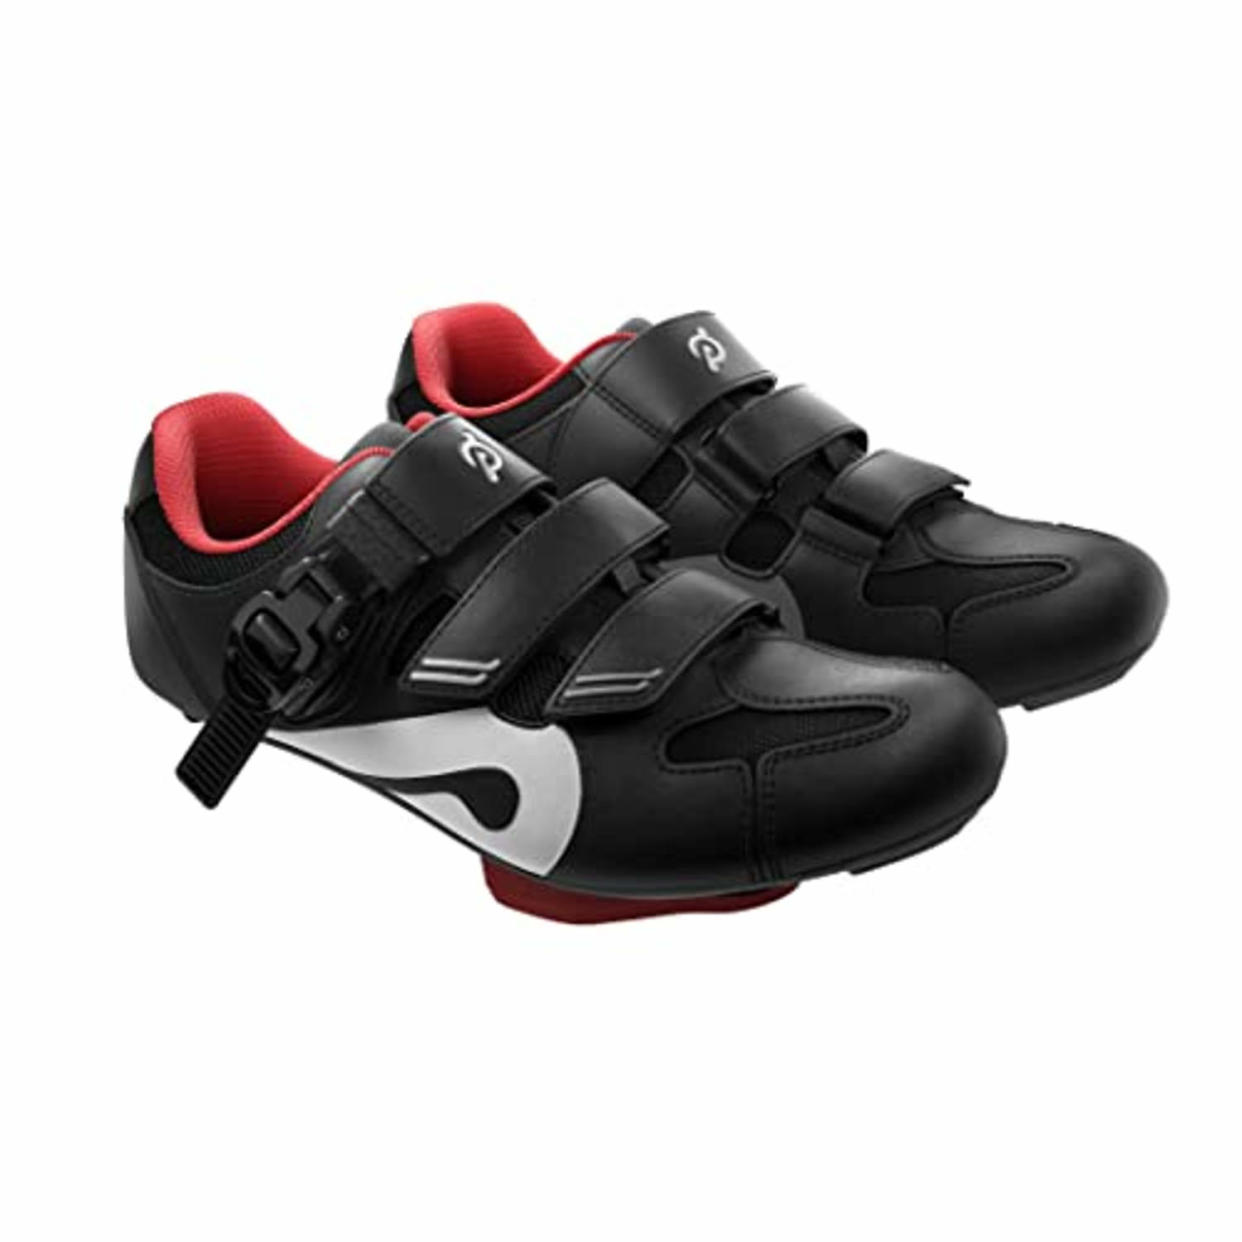 Peloton Cycling Shoes for Peloton Bike and Bike+ with Delta-Compatible Bike Cleats - Size EU 39 / Size US 8 Women (AMAZON)